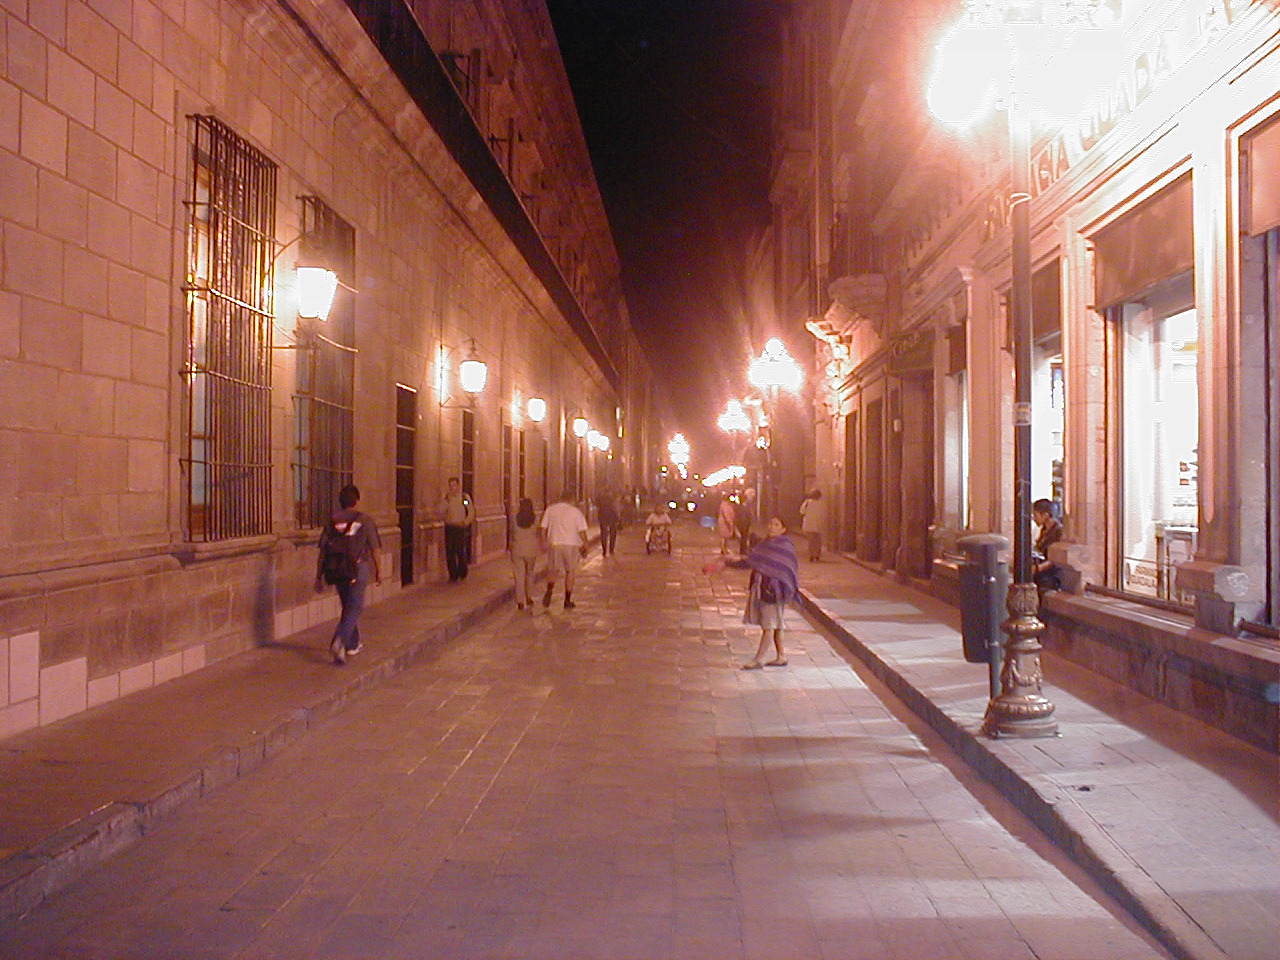 dario night nighttime street lamps lights shops